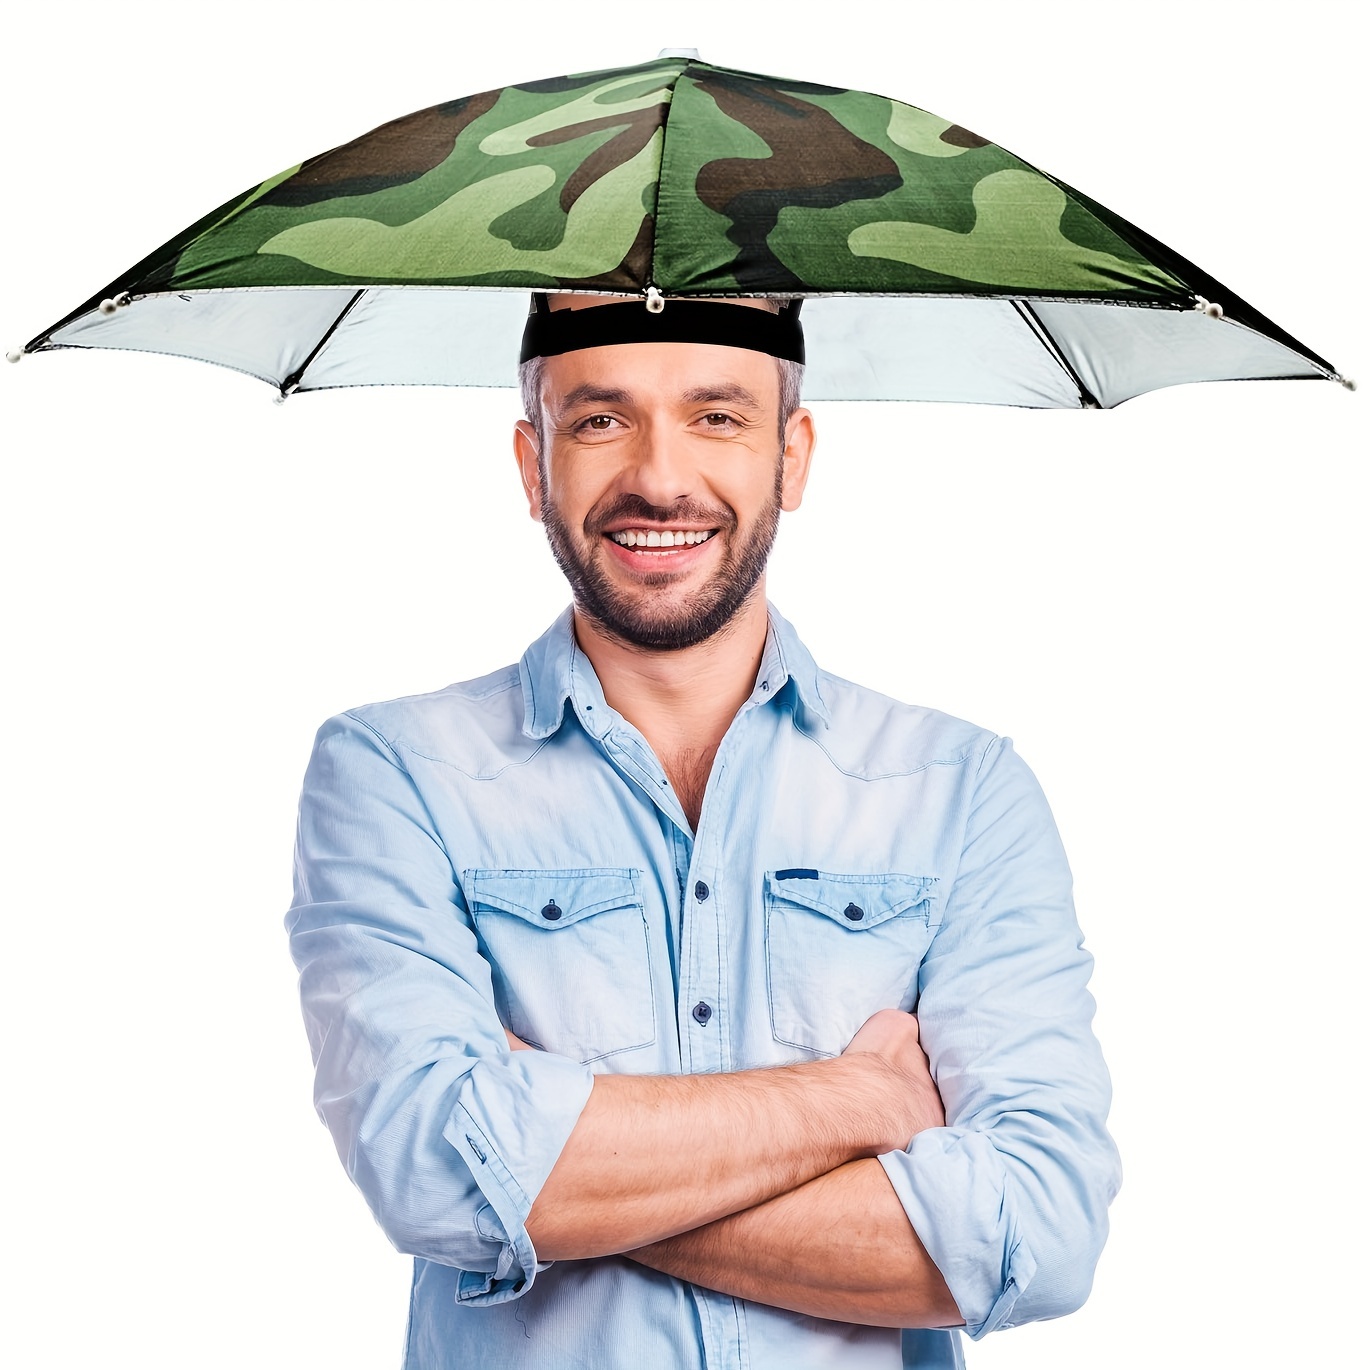 Umbrella Hat Portable Sunhat Rain Caps Folding Fishing Umbrella Cap  Sunshade Headwear for Hiking Camping Gardening Beach